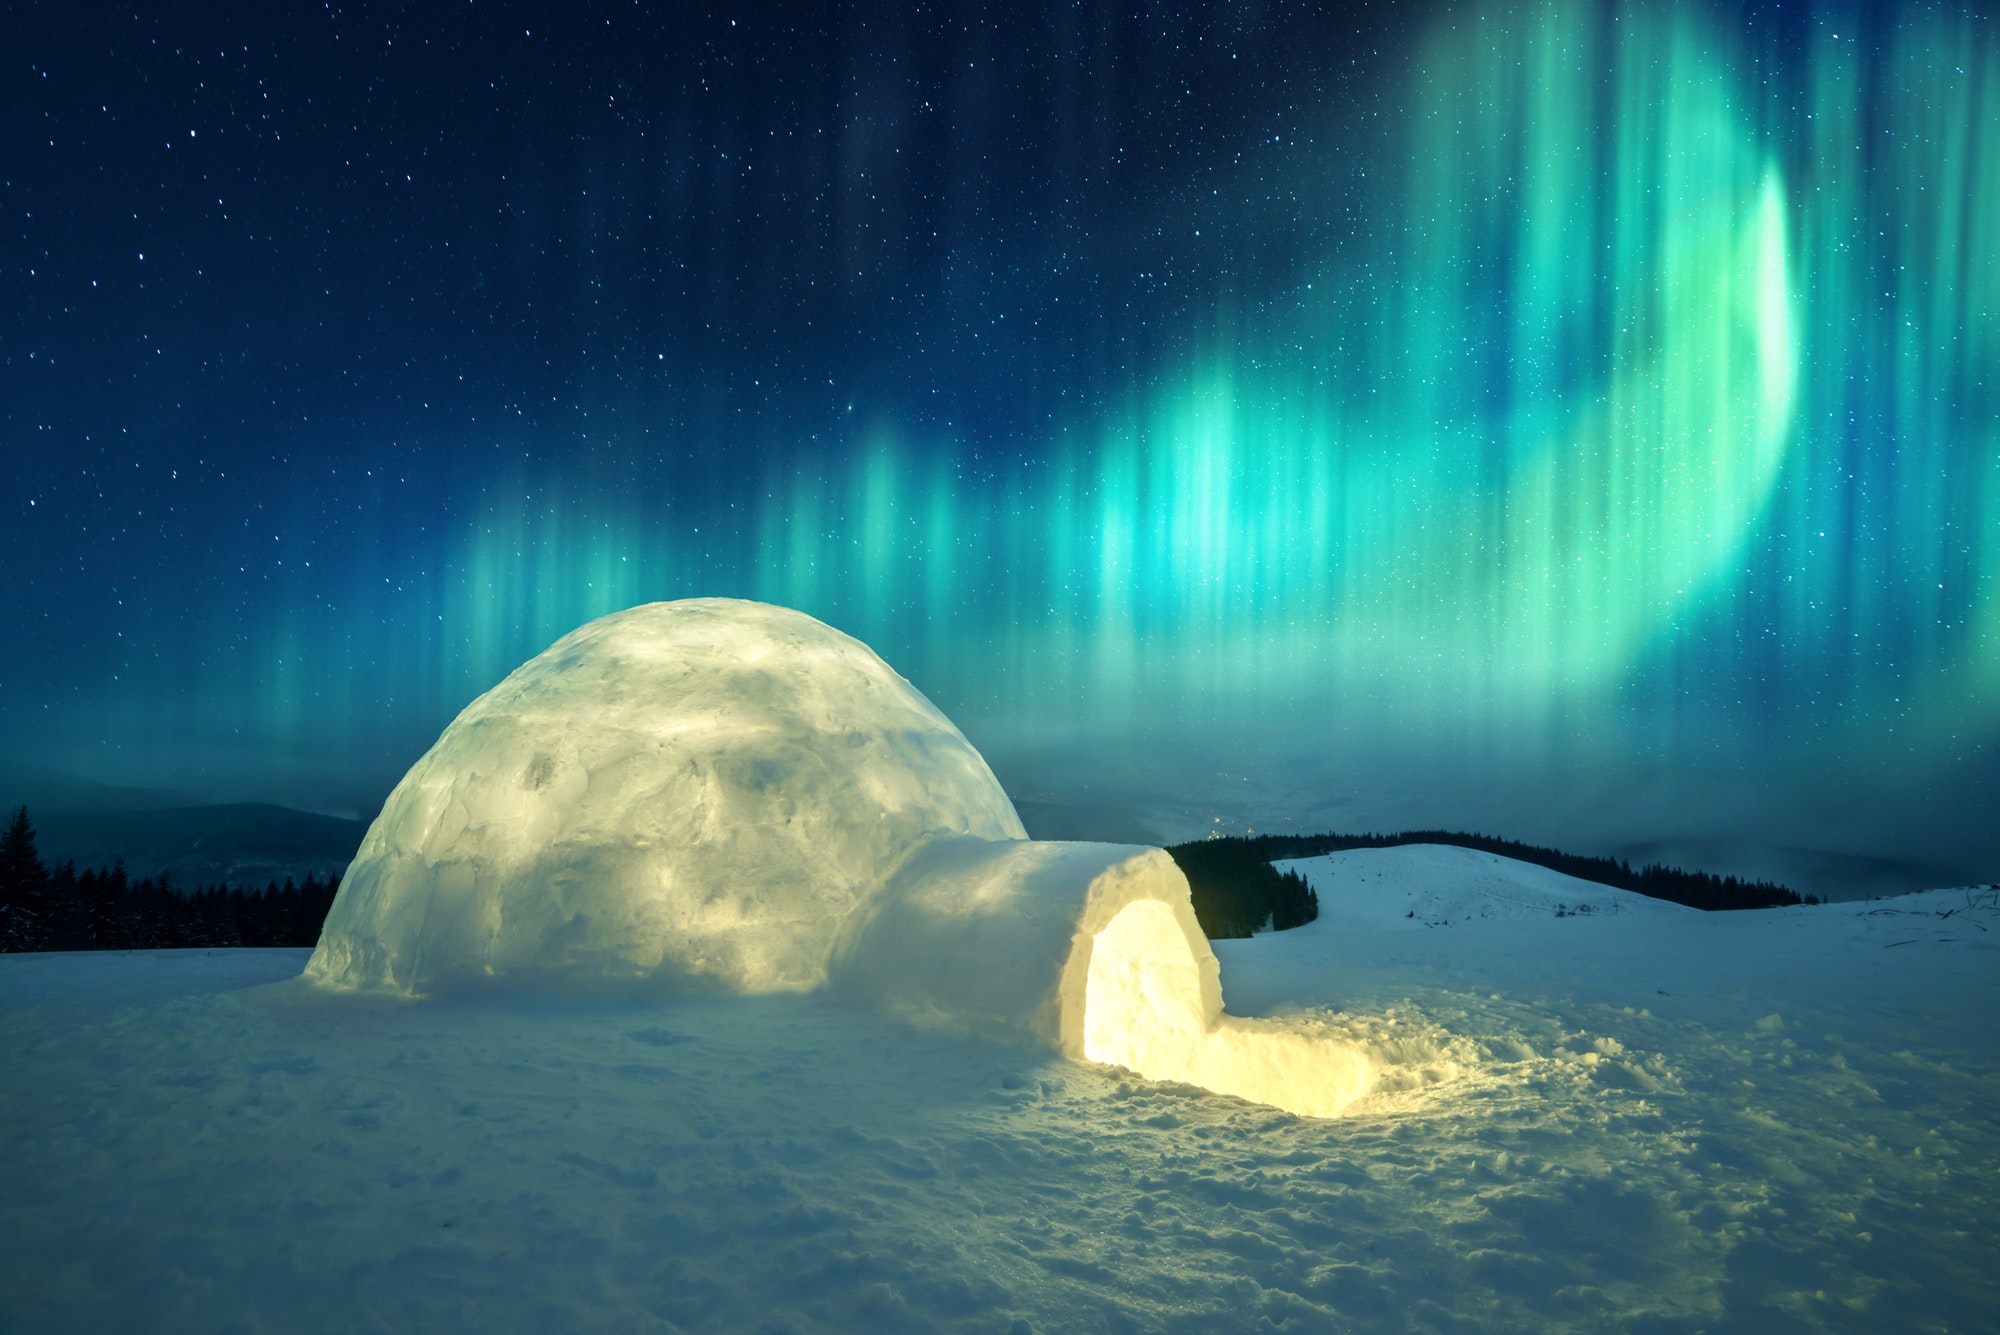 Wintry scene with glowing polar lights and snowy igloo